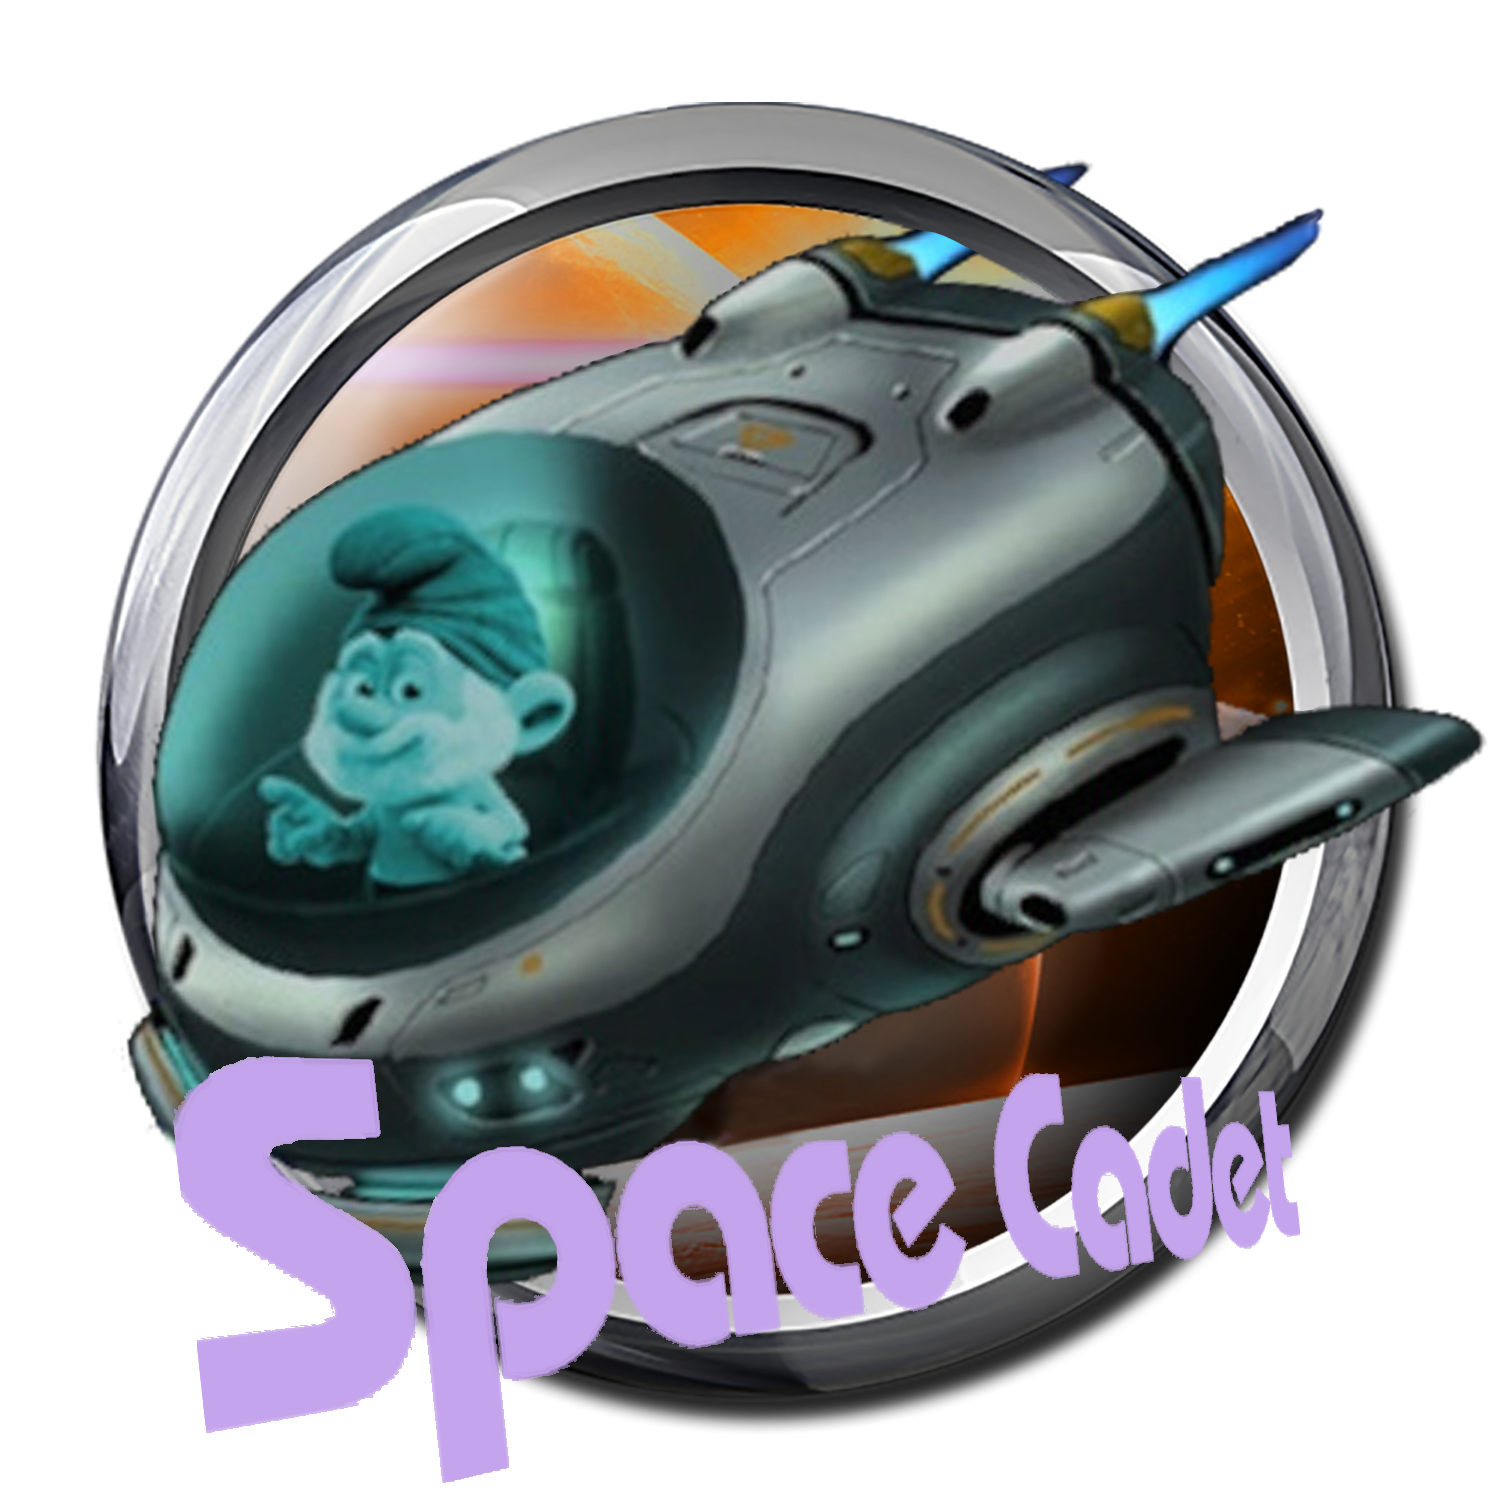 JP's Space Cadet 